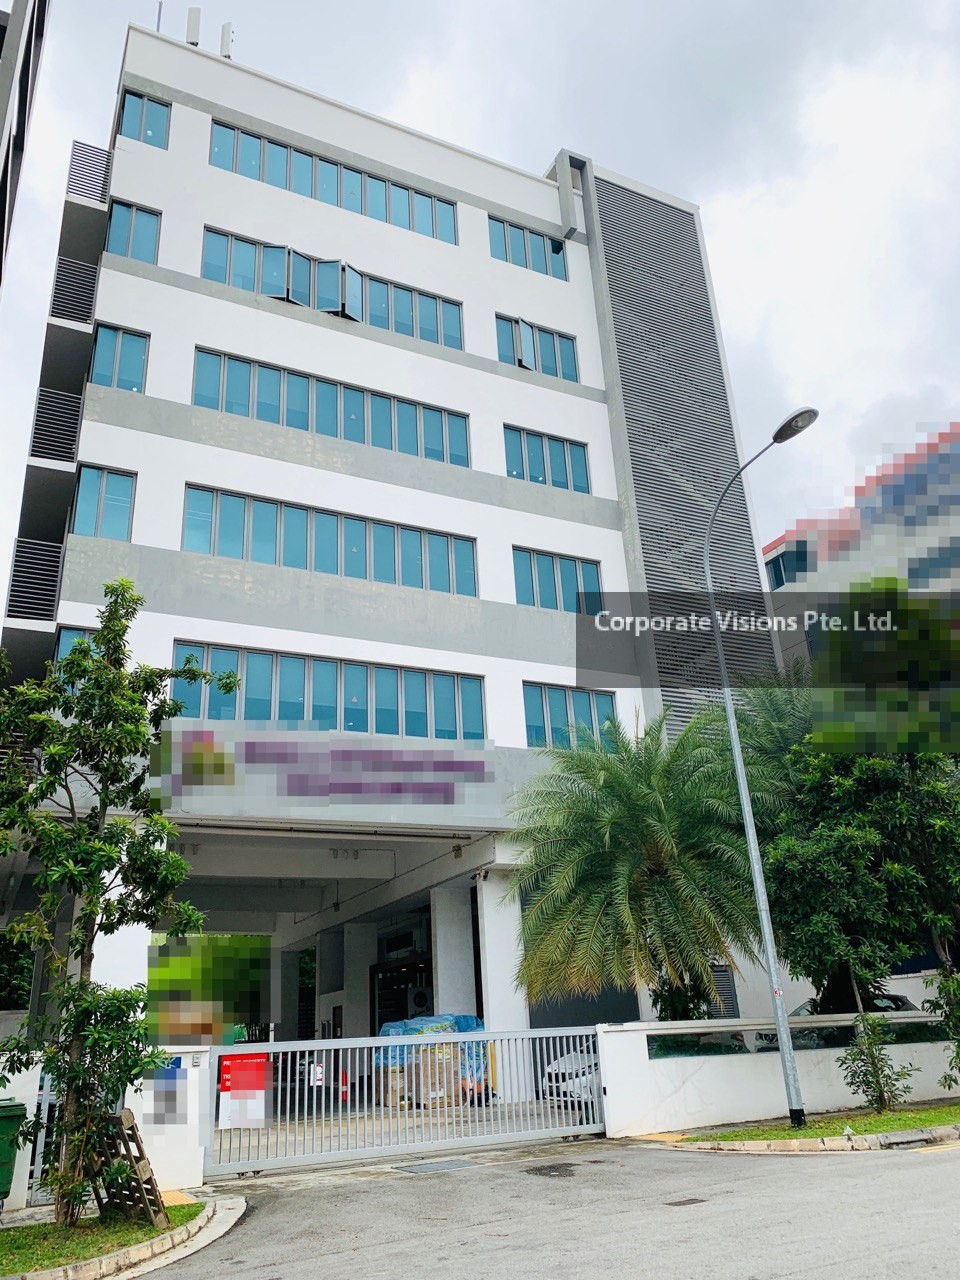 Ghim Li Industrial building 21 jalan mesin singapore 338817, Ghim Li  &#8211; 21 Jalan Mesin,  Singapore 368817